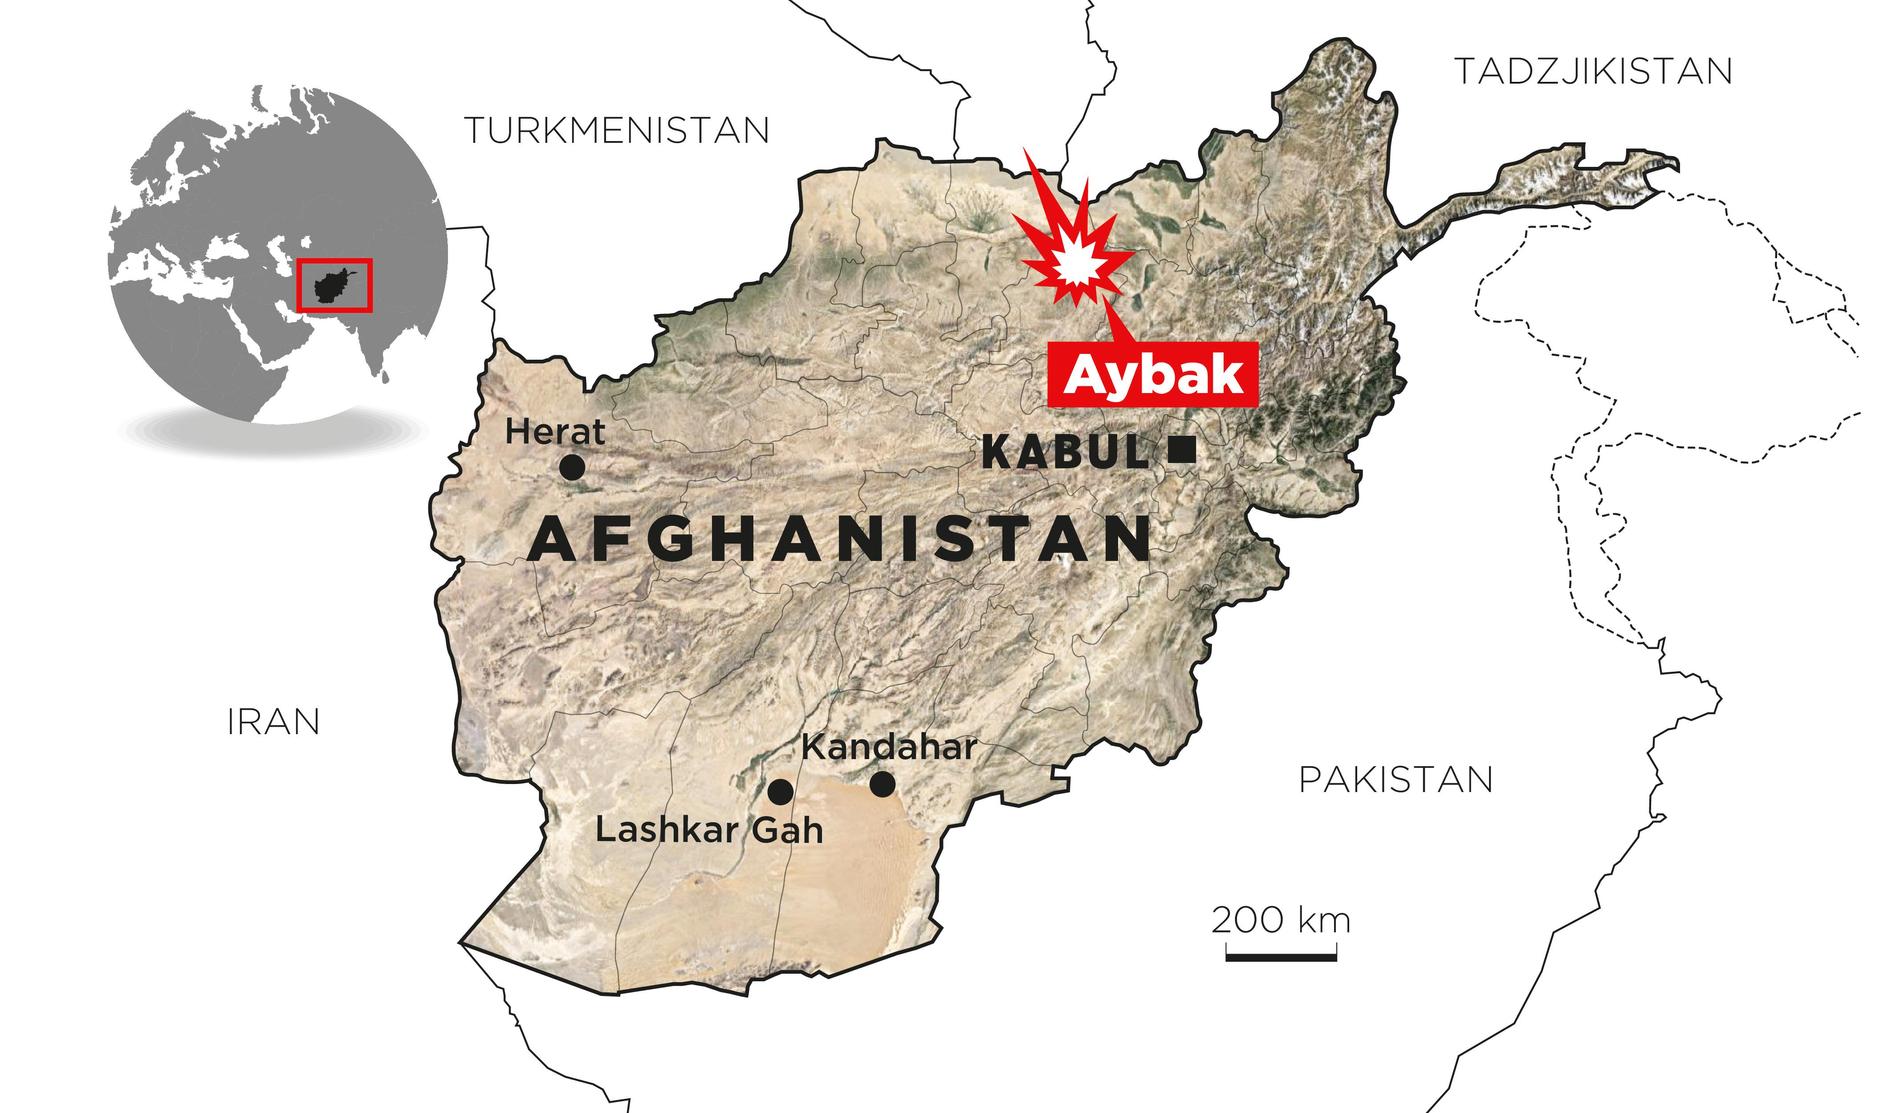 En explosion har skett på en skola i Aybak i norra Afghanistan.